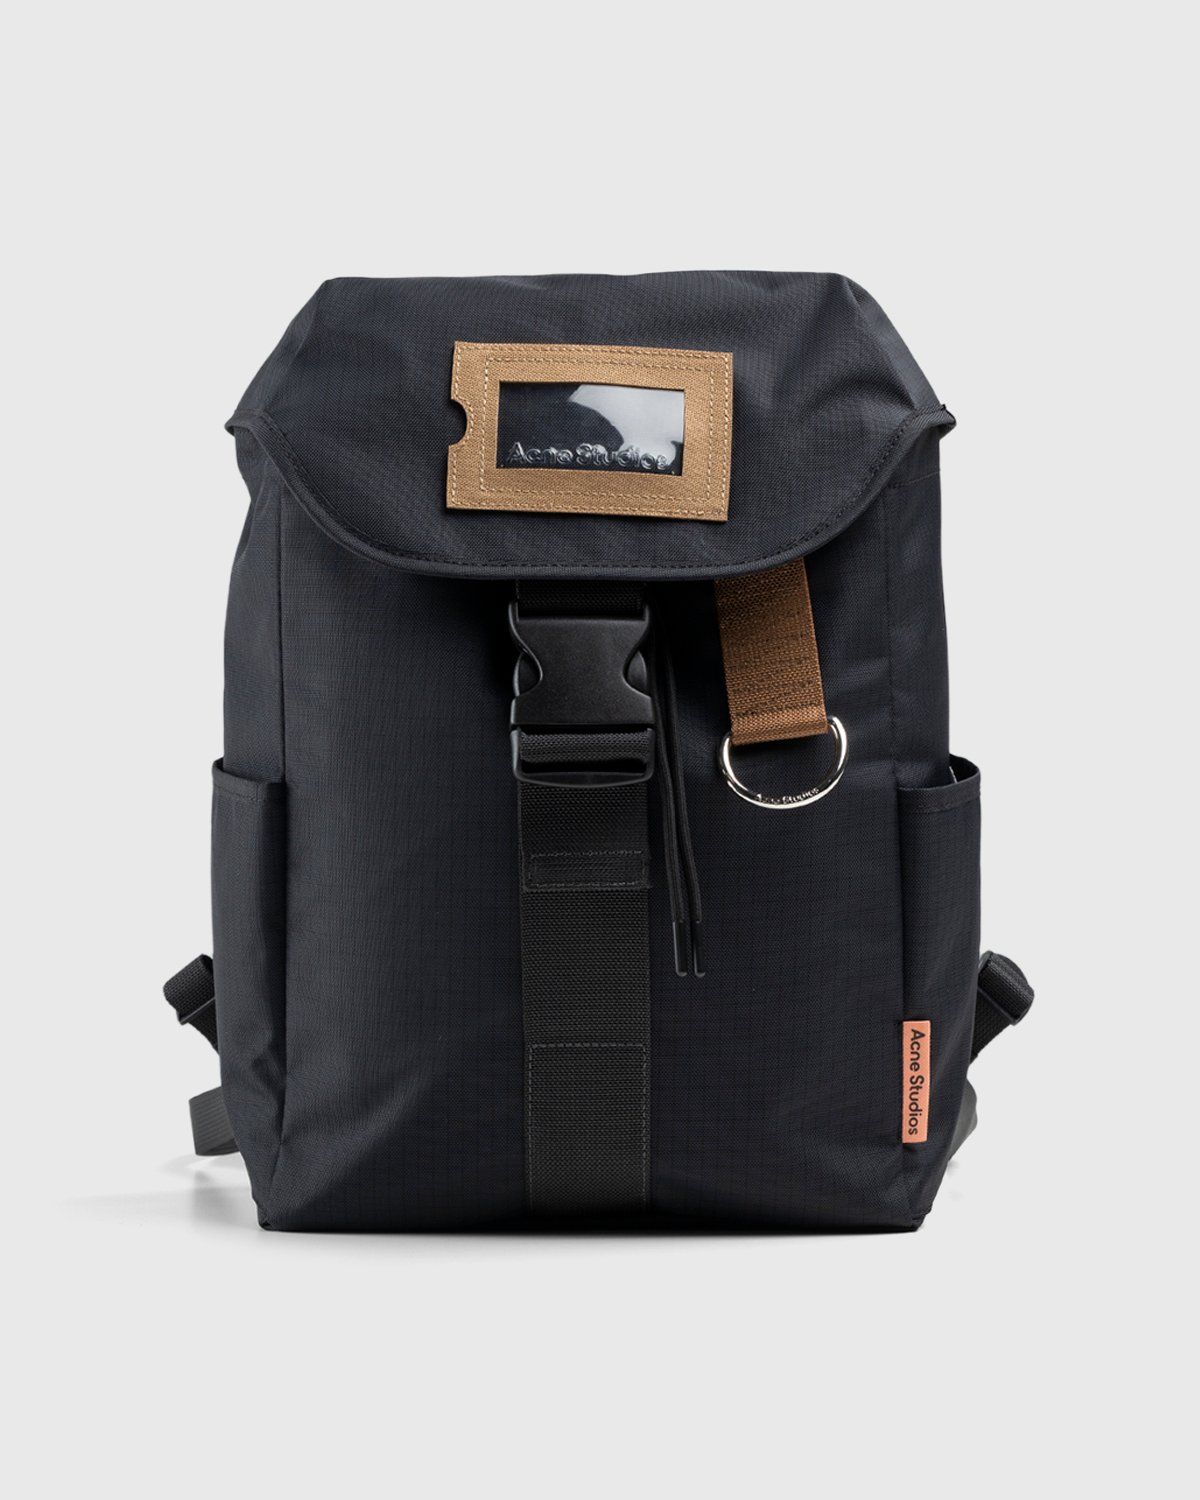 Acne Studios – Large Ripstop Backpack Black/Khaki Green - Backpacks - Black - Image 1